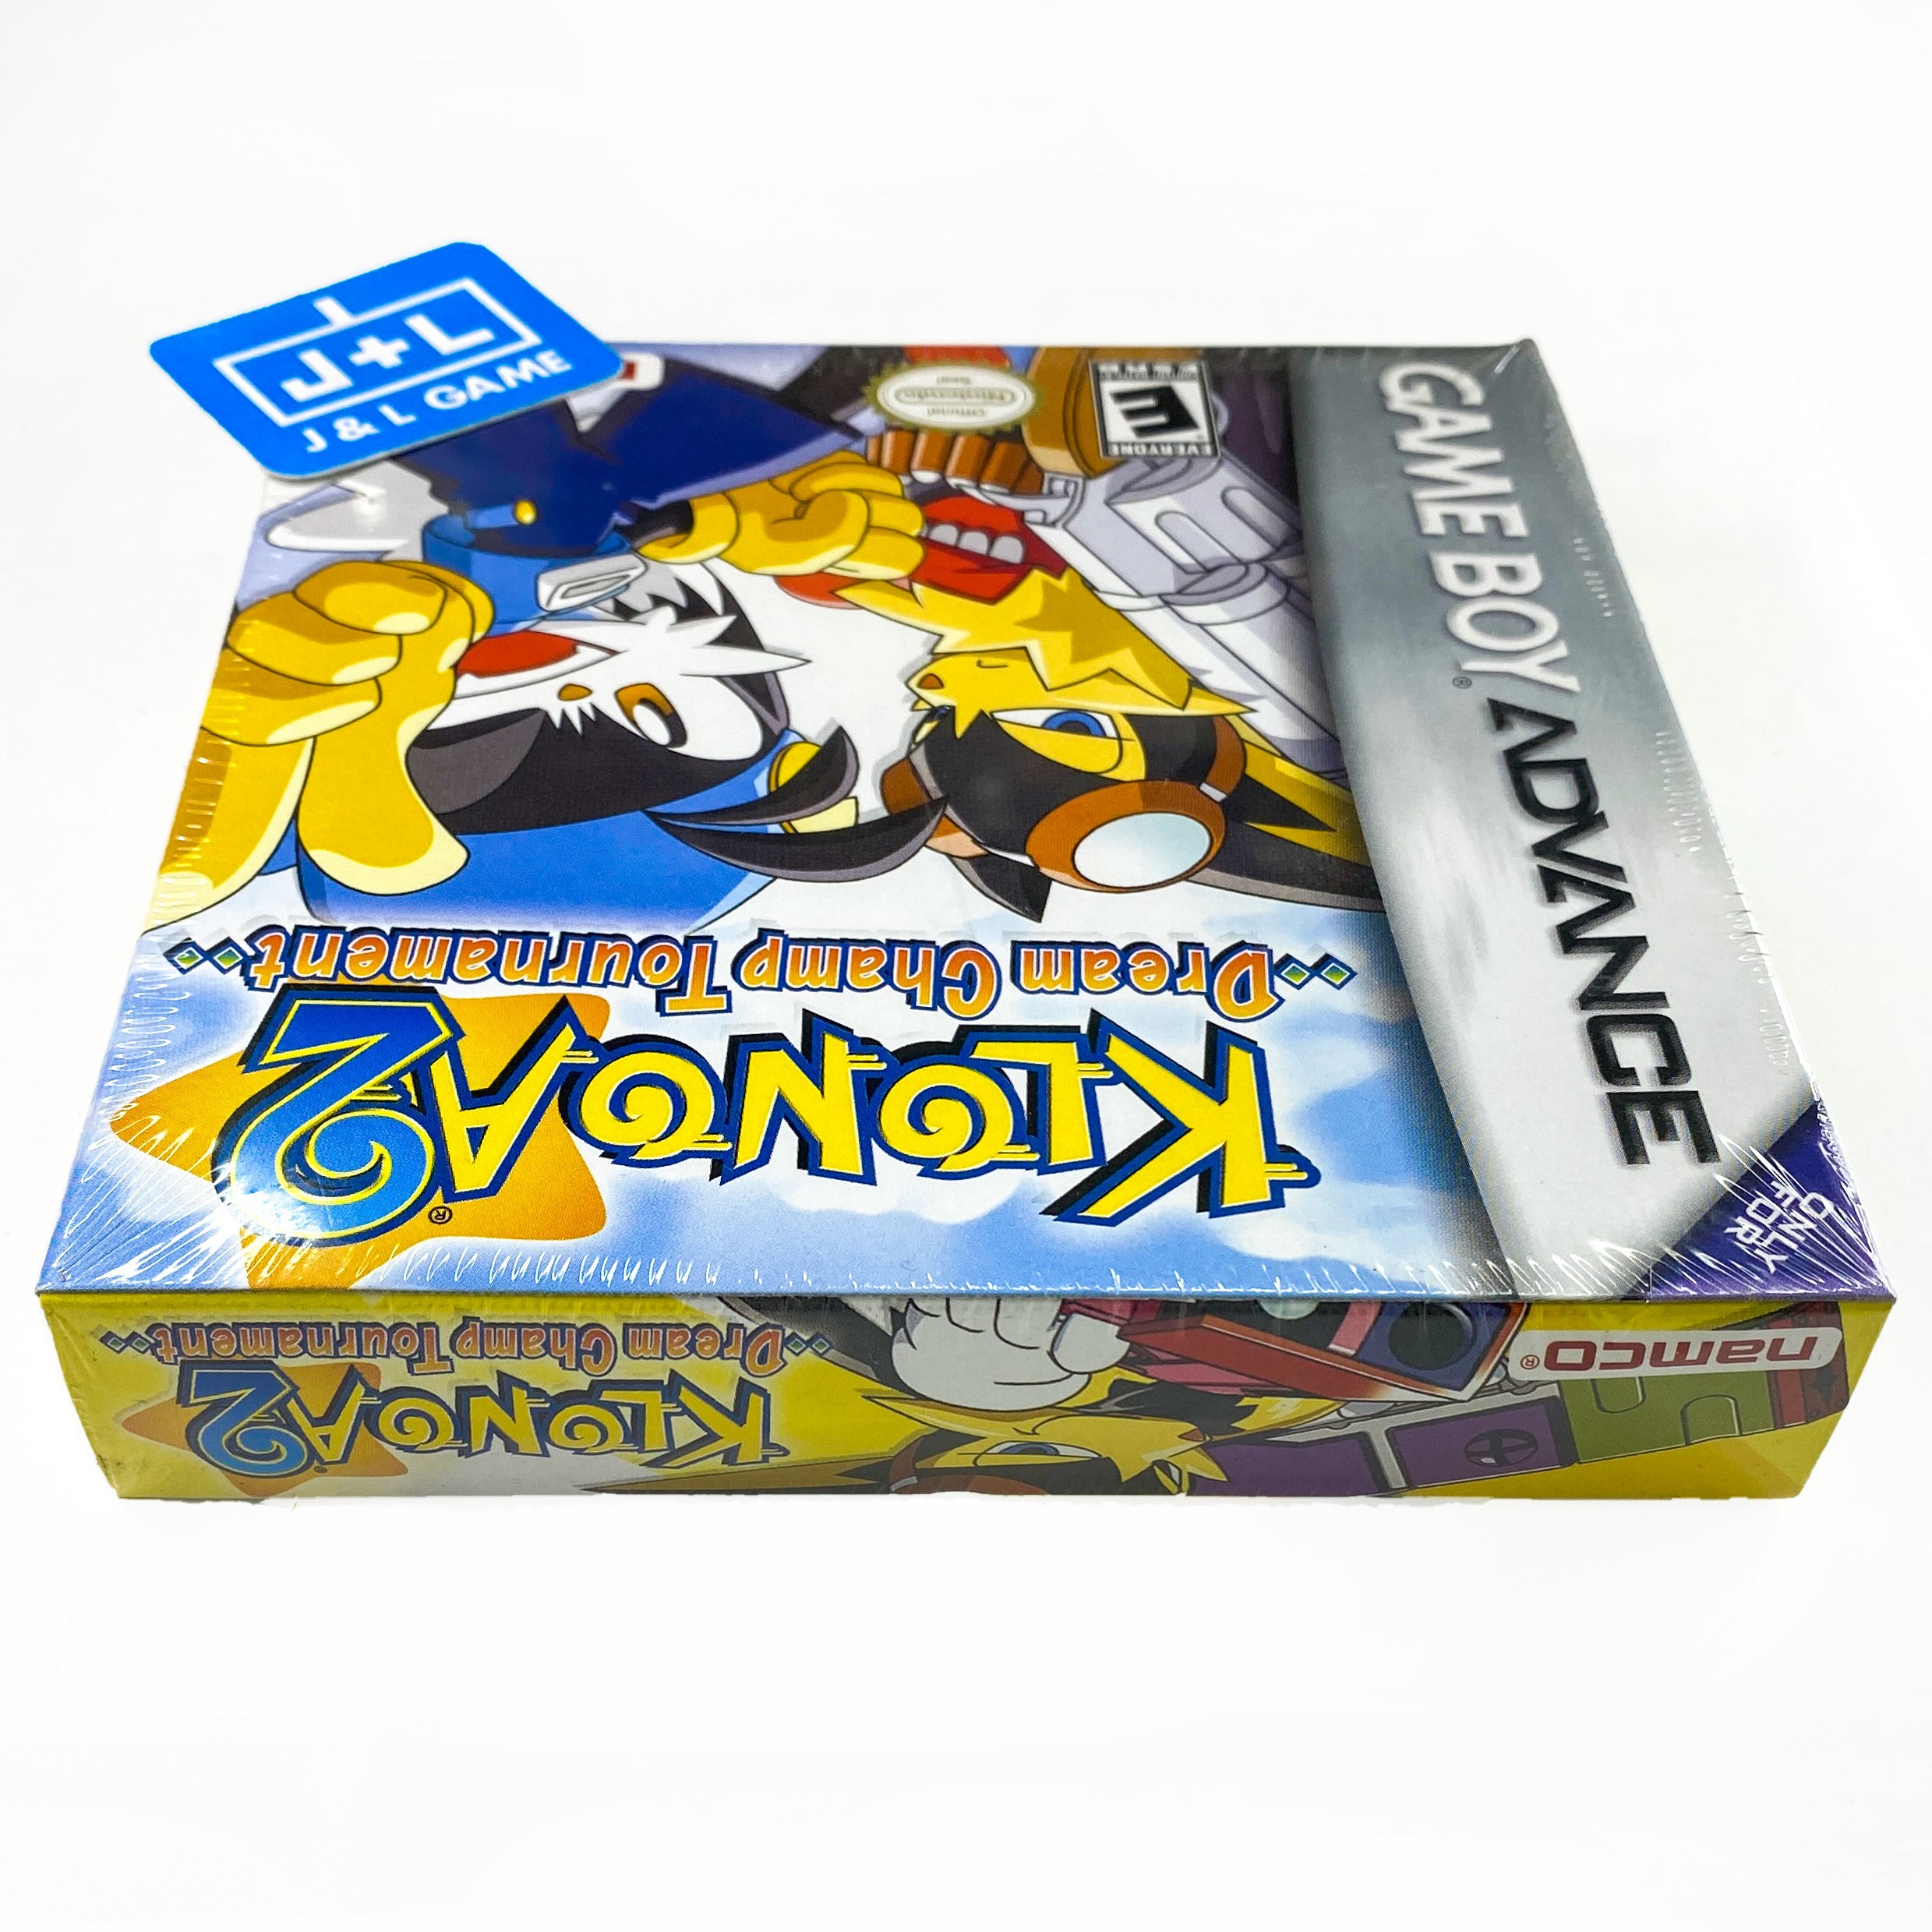 Klonoa 2: Dream Champ Tournament - (GBA) Game Boy Advance Video Games Namco   